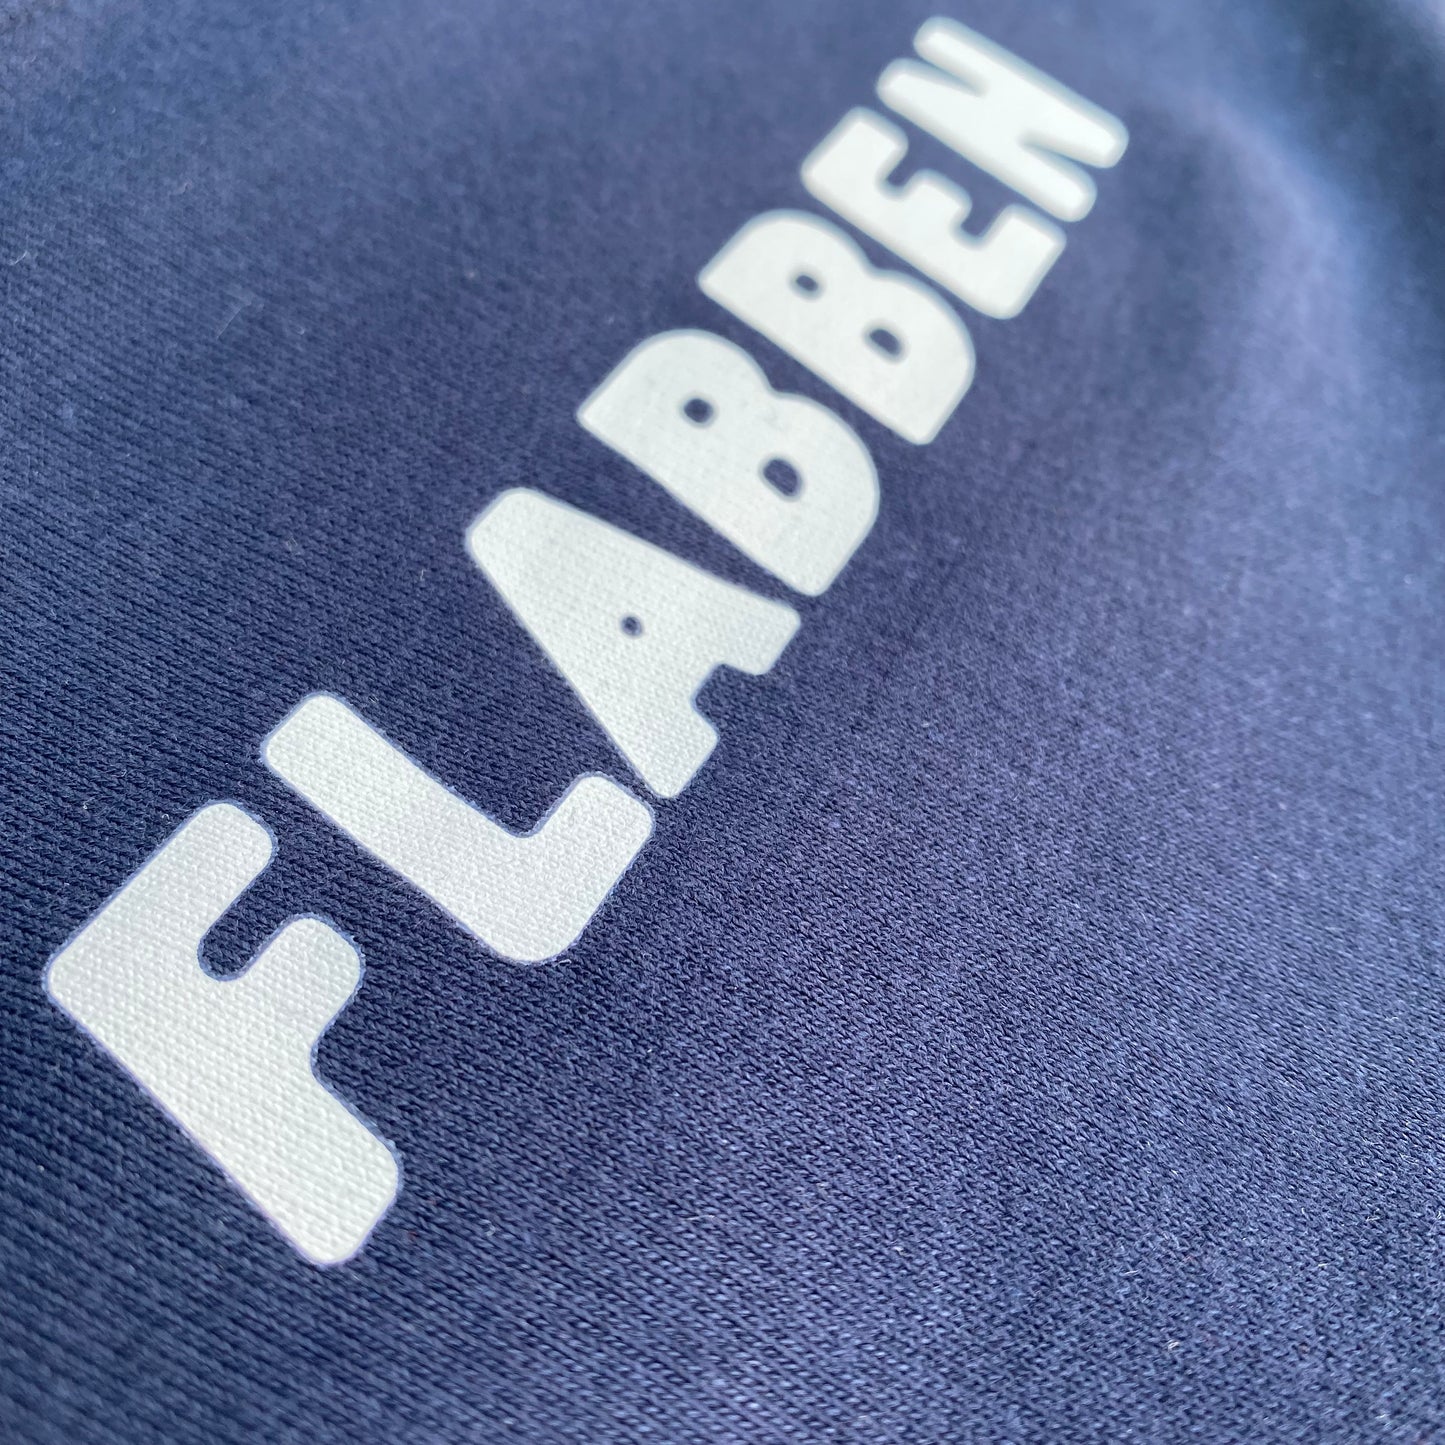 Flabben - Barn/Baby T-shirt - Navy